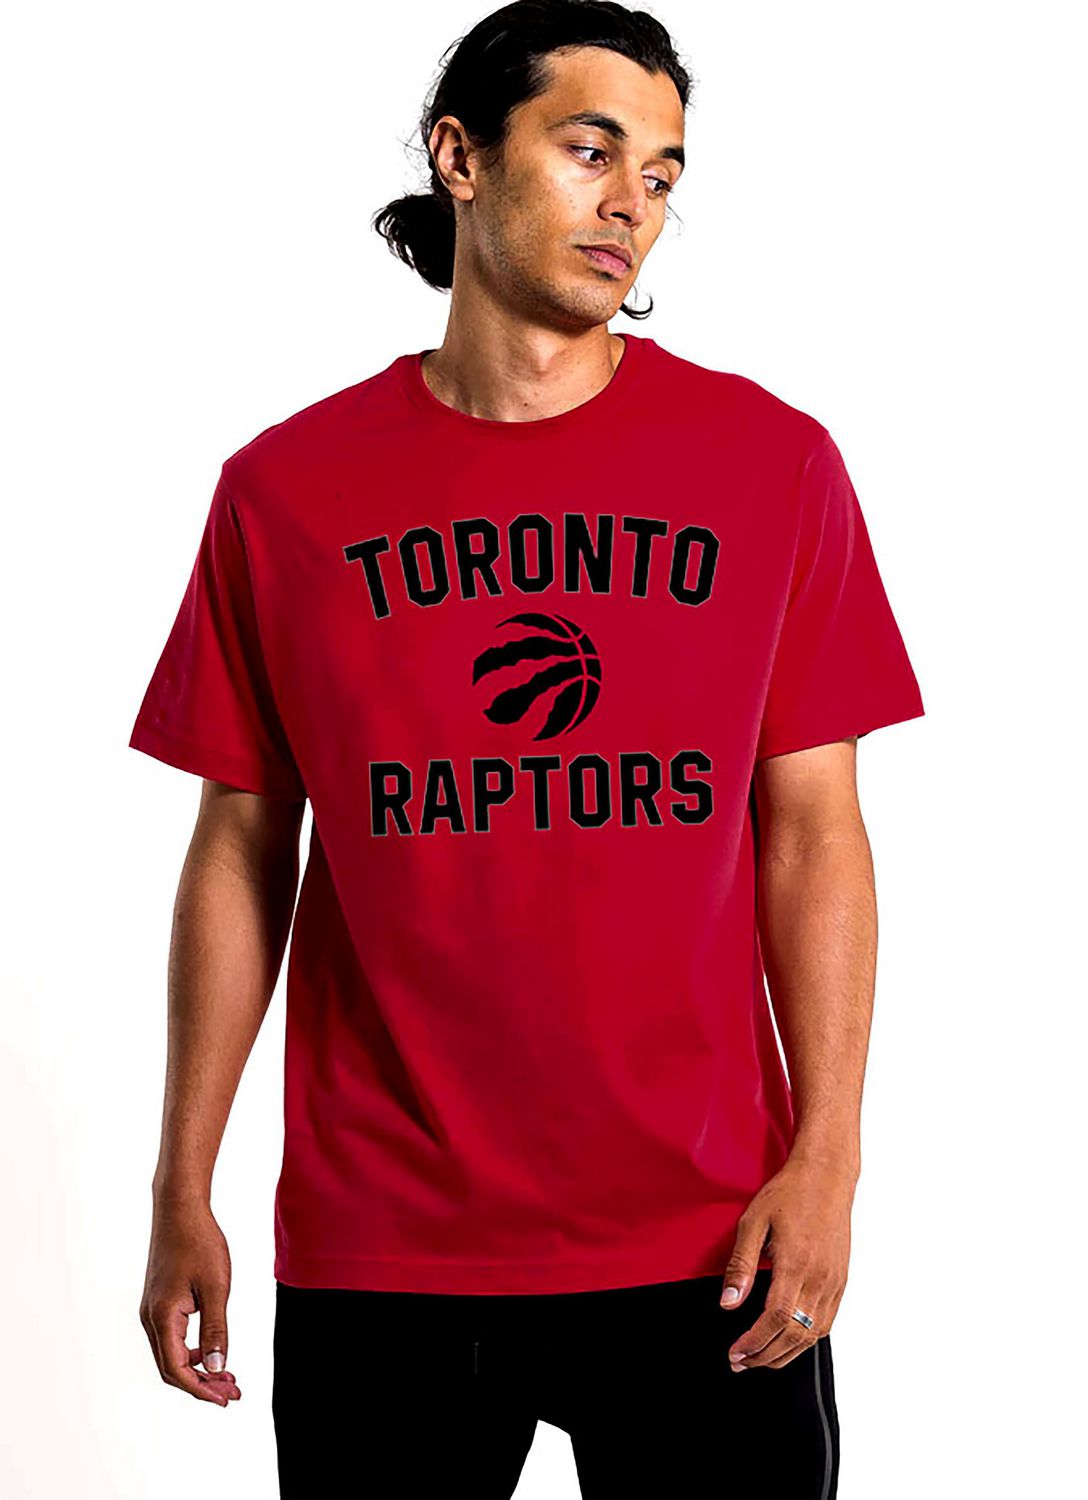 Toronto Raptors T Shirt Mens Size XL Red Short Sleeve NBA Basketbal Adults